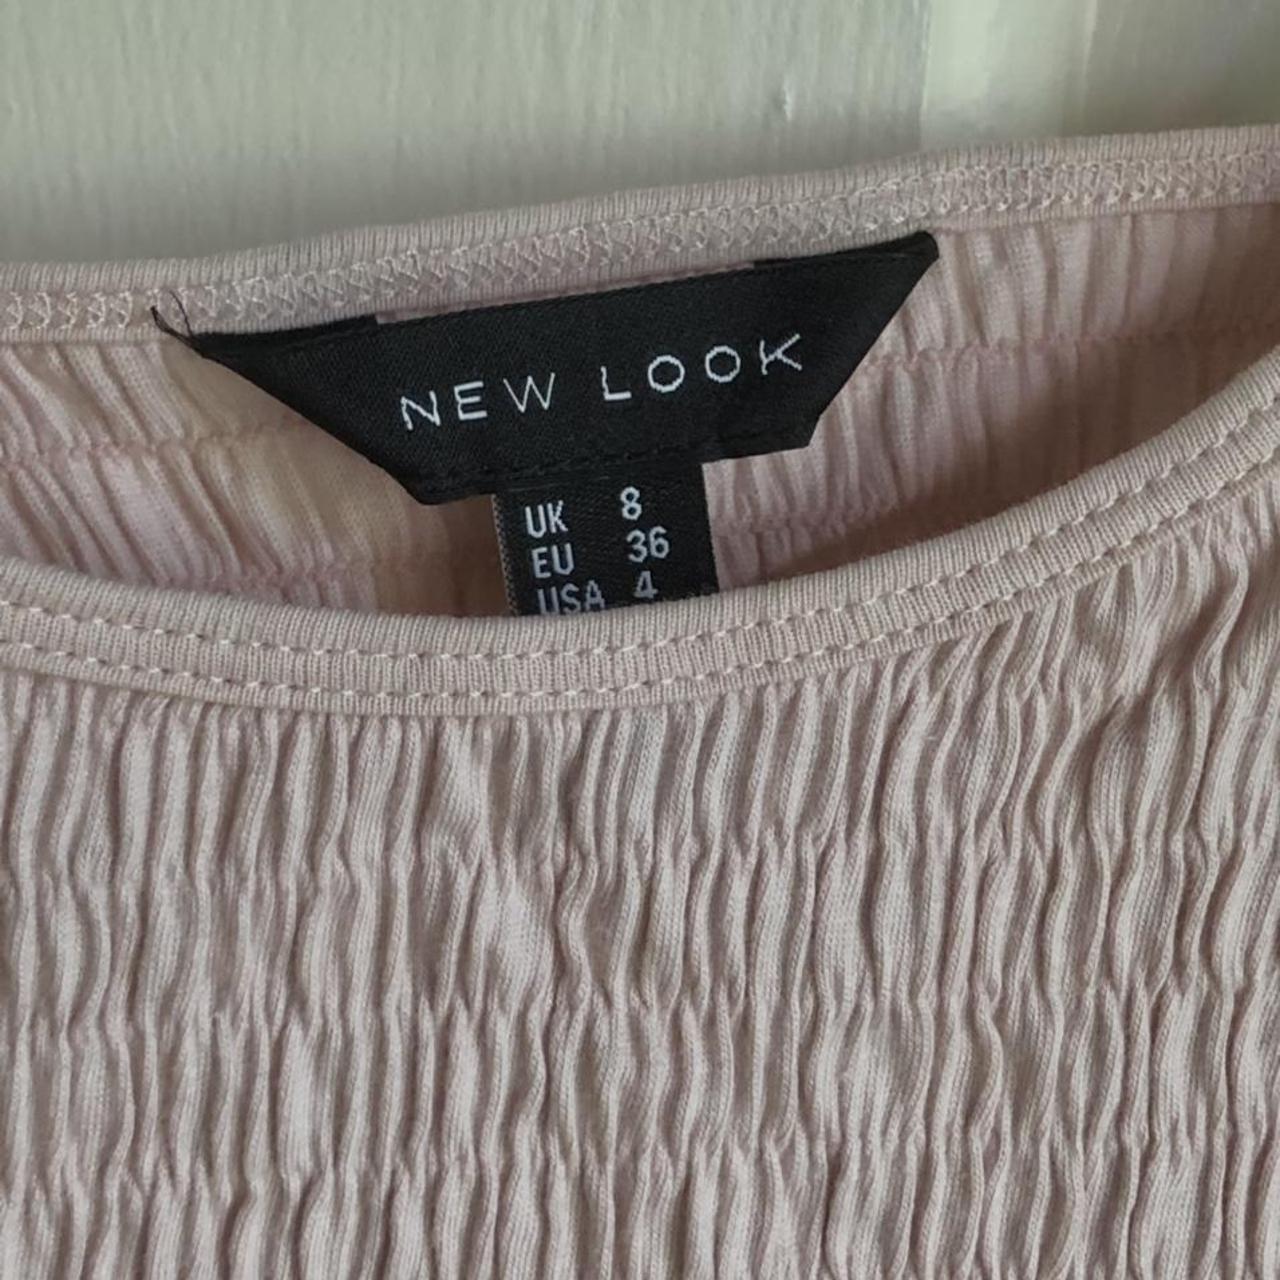 Clam pink top buy New Look💫 Never worn☁️ Size 8💫 - Depop